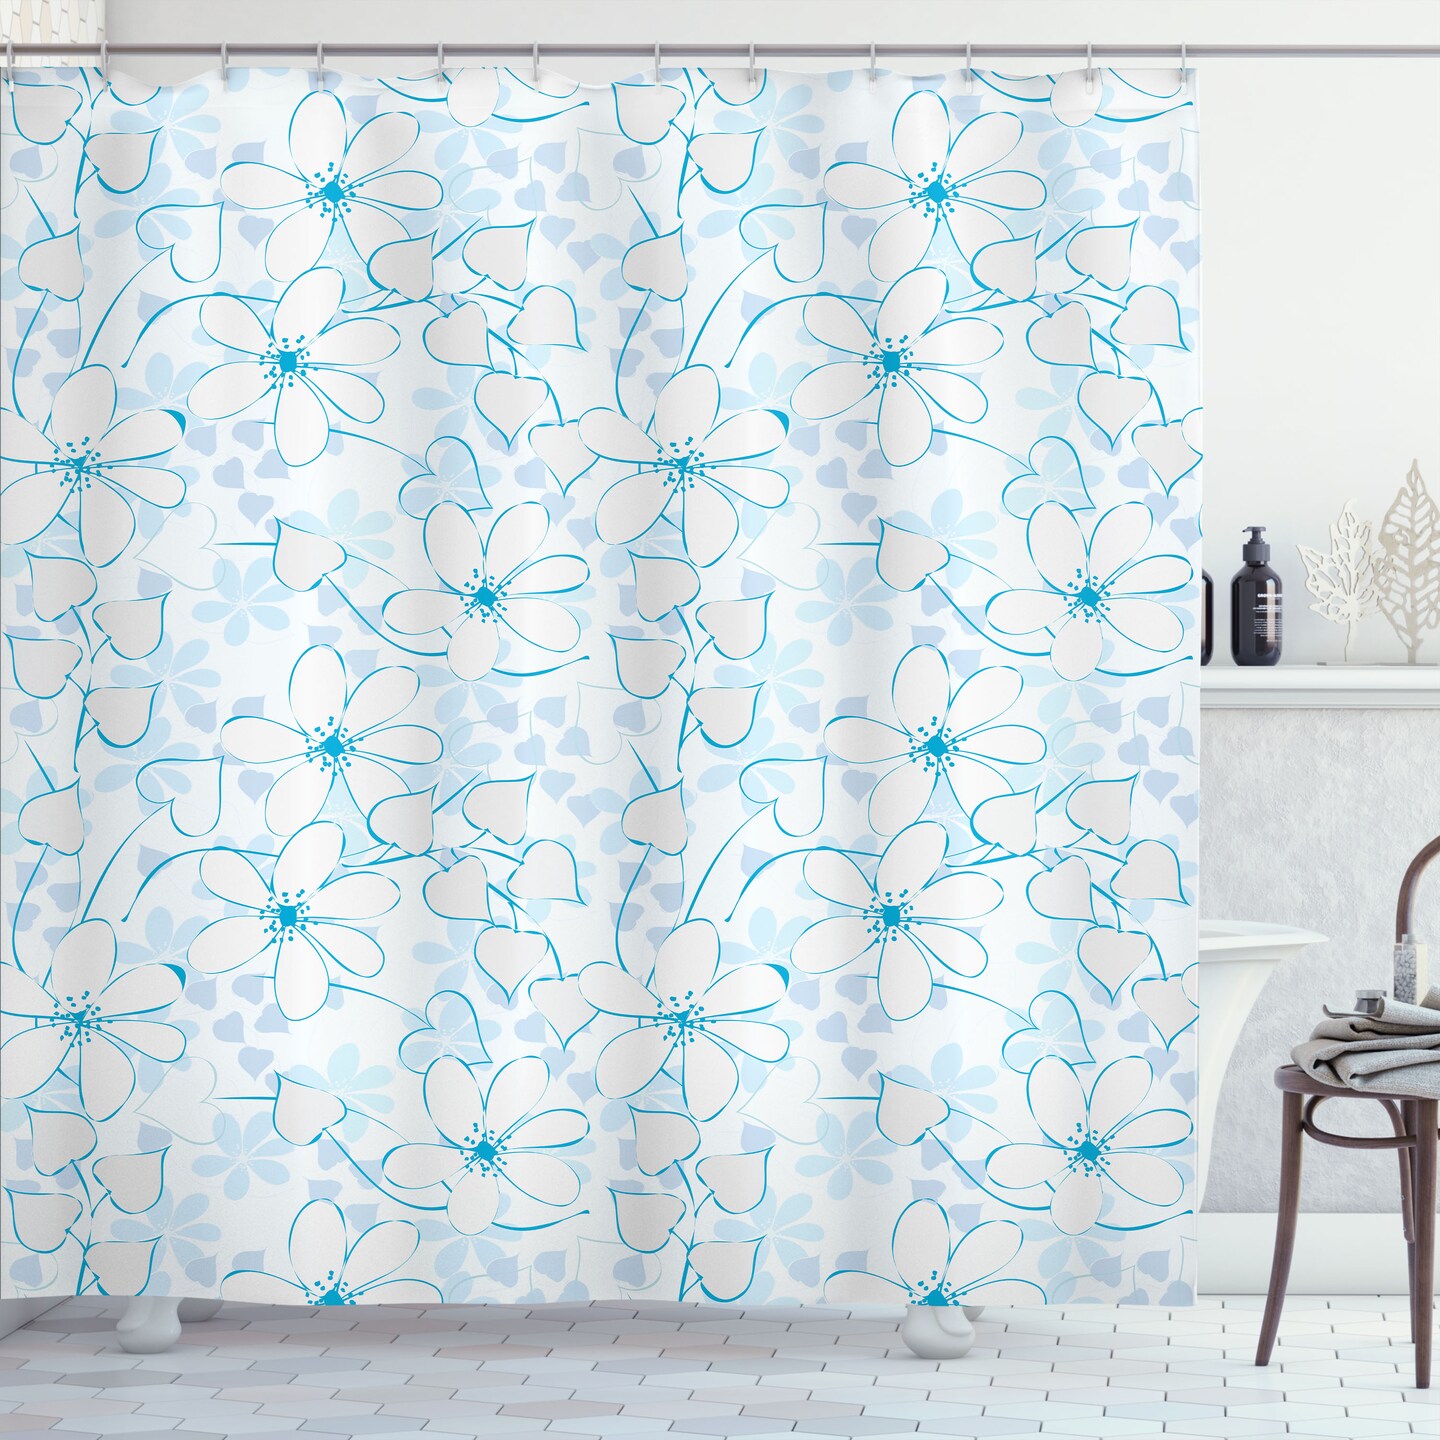 Light-blue Shower Curtains to Match Your Bathroom Decor